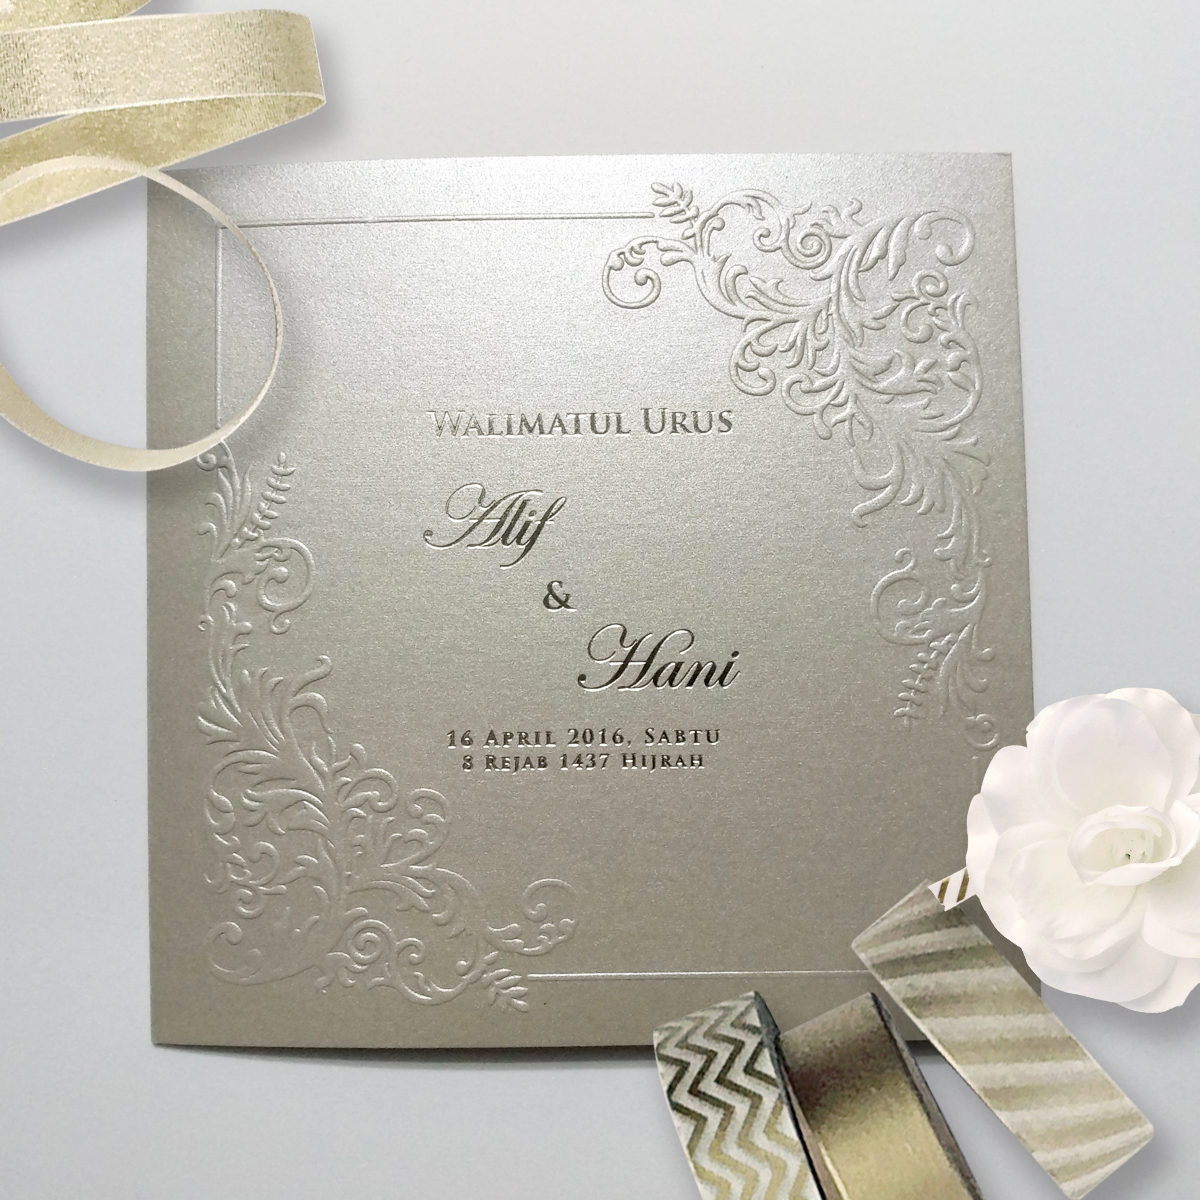 jentayu design kad kahwin royal series vip metallic silver hot stamping silver inlay or print on card wedding cards malaysia 